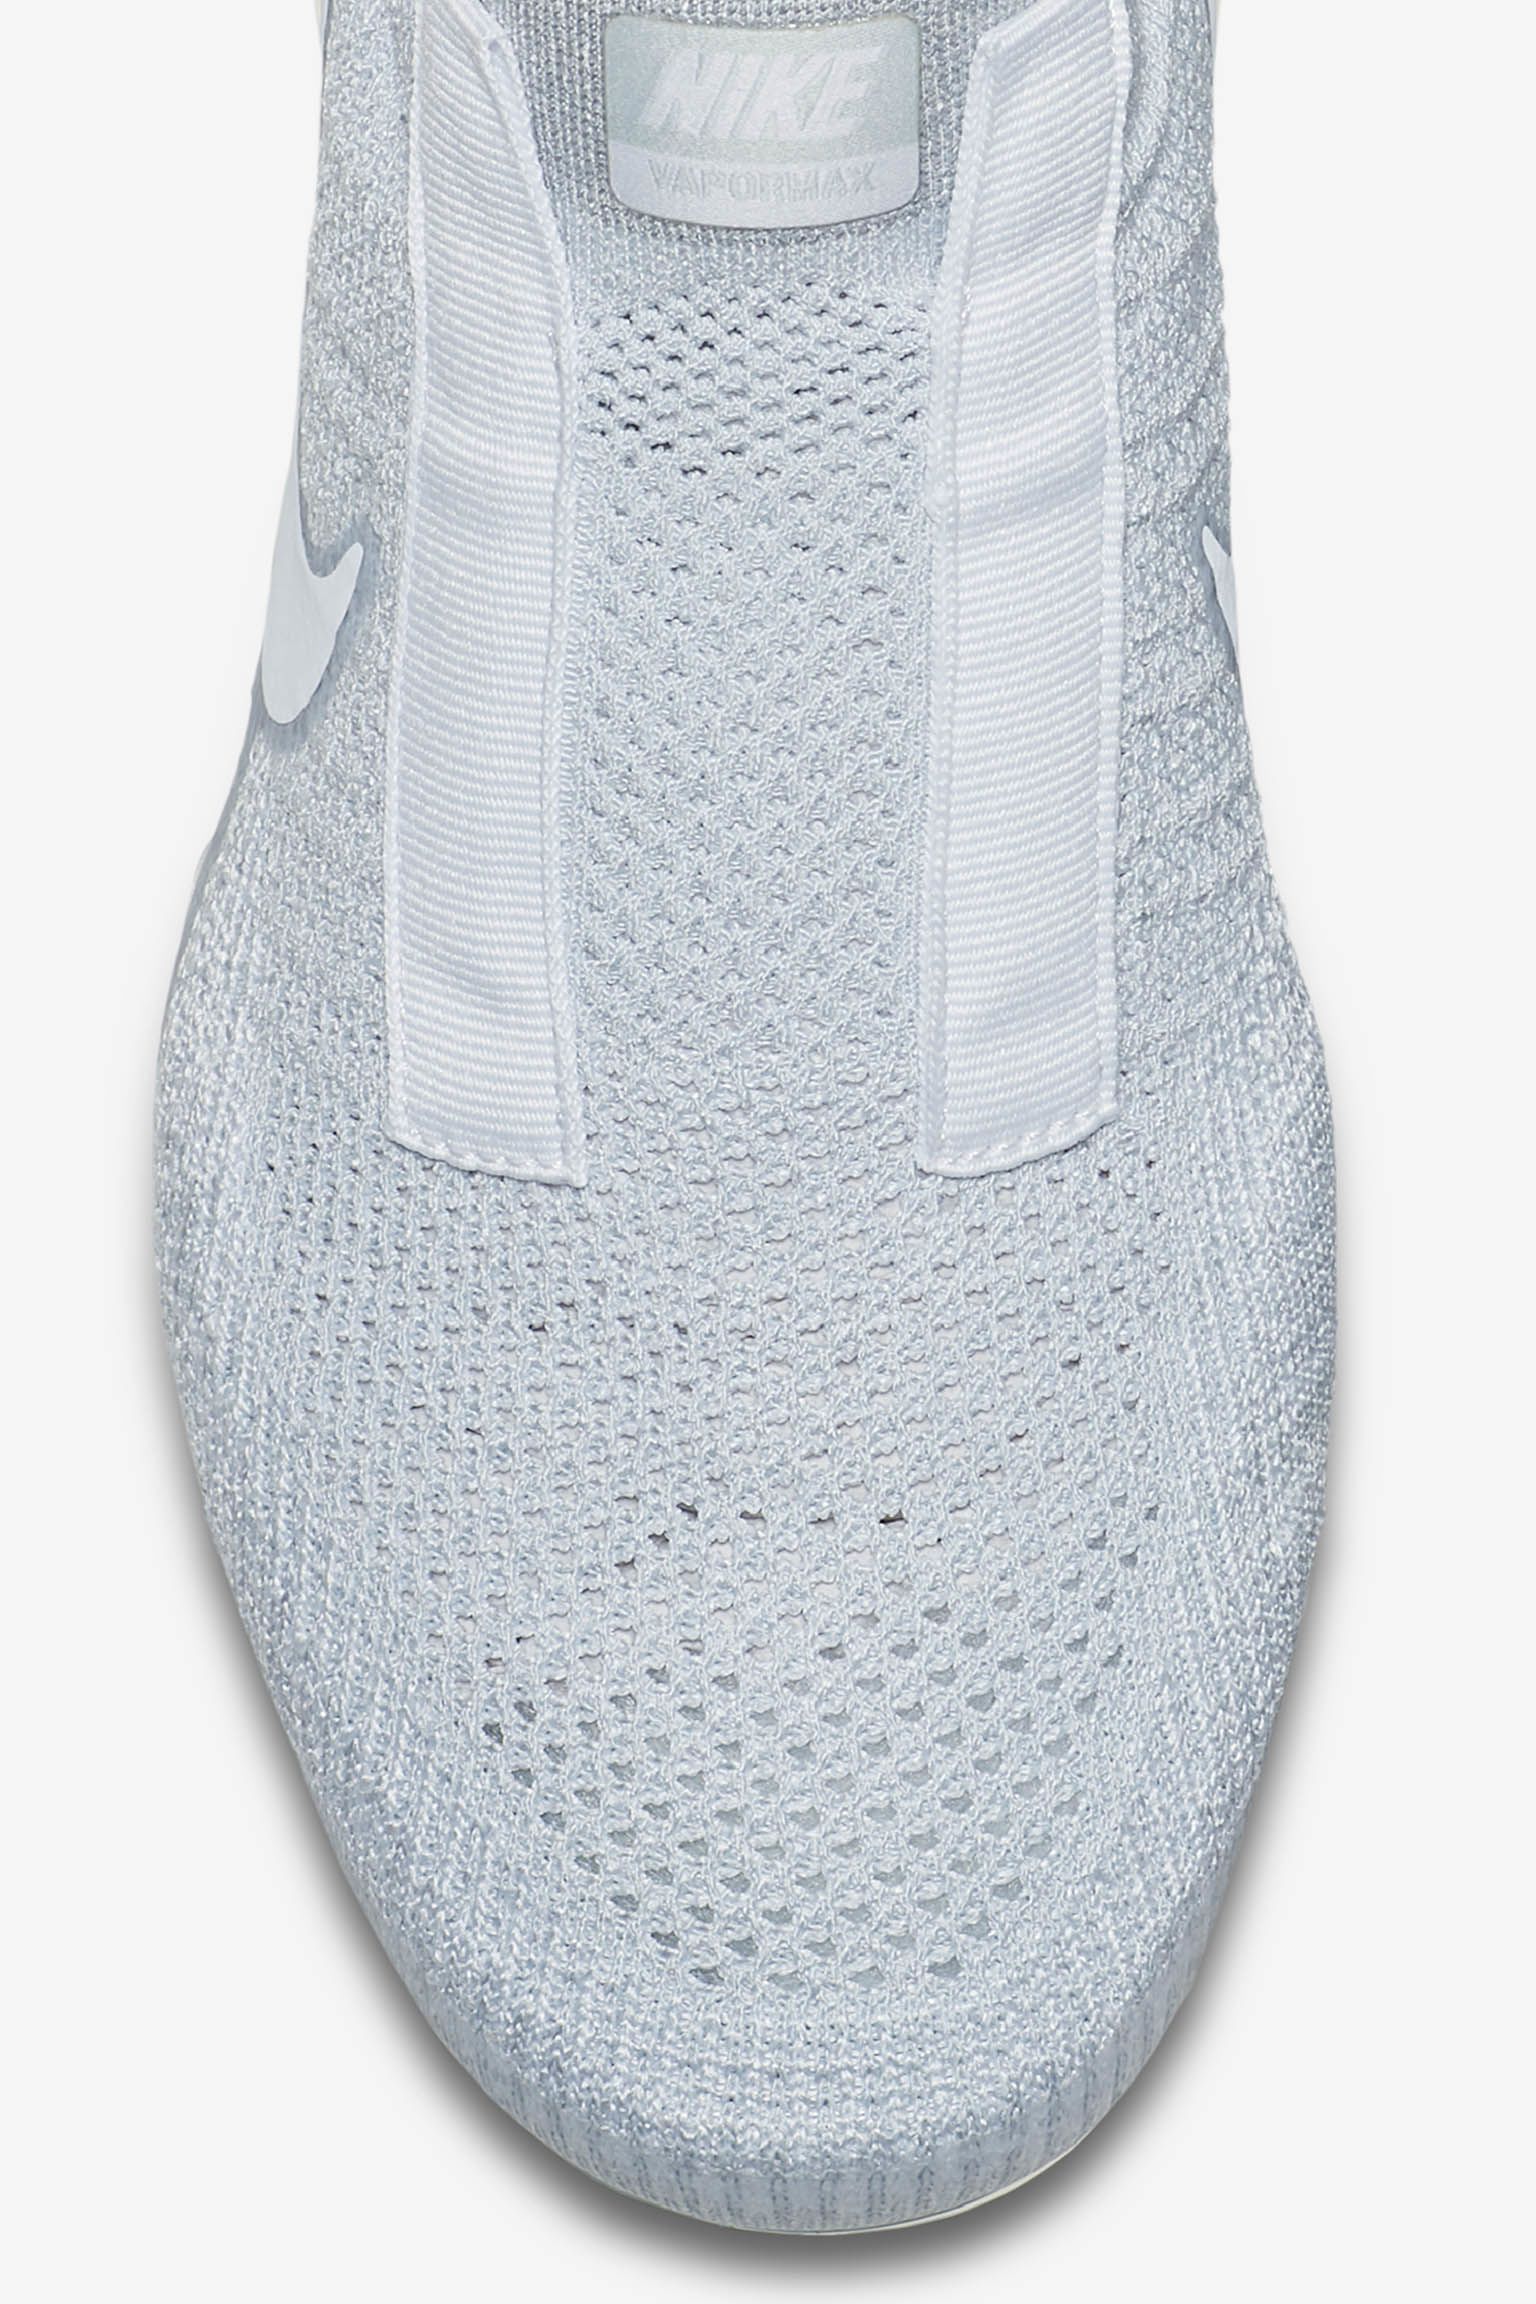 Fecha de lanzamiento de las Air VaporMax "Pure Platinum &amp; White". Nike SNKRS ES